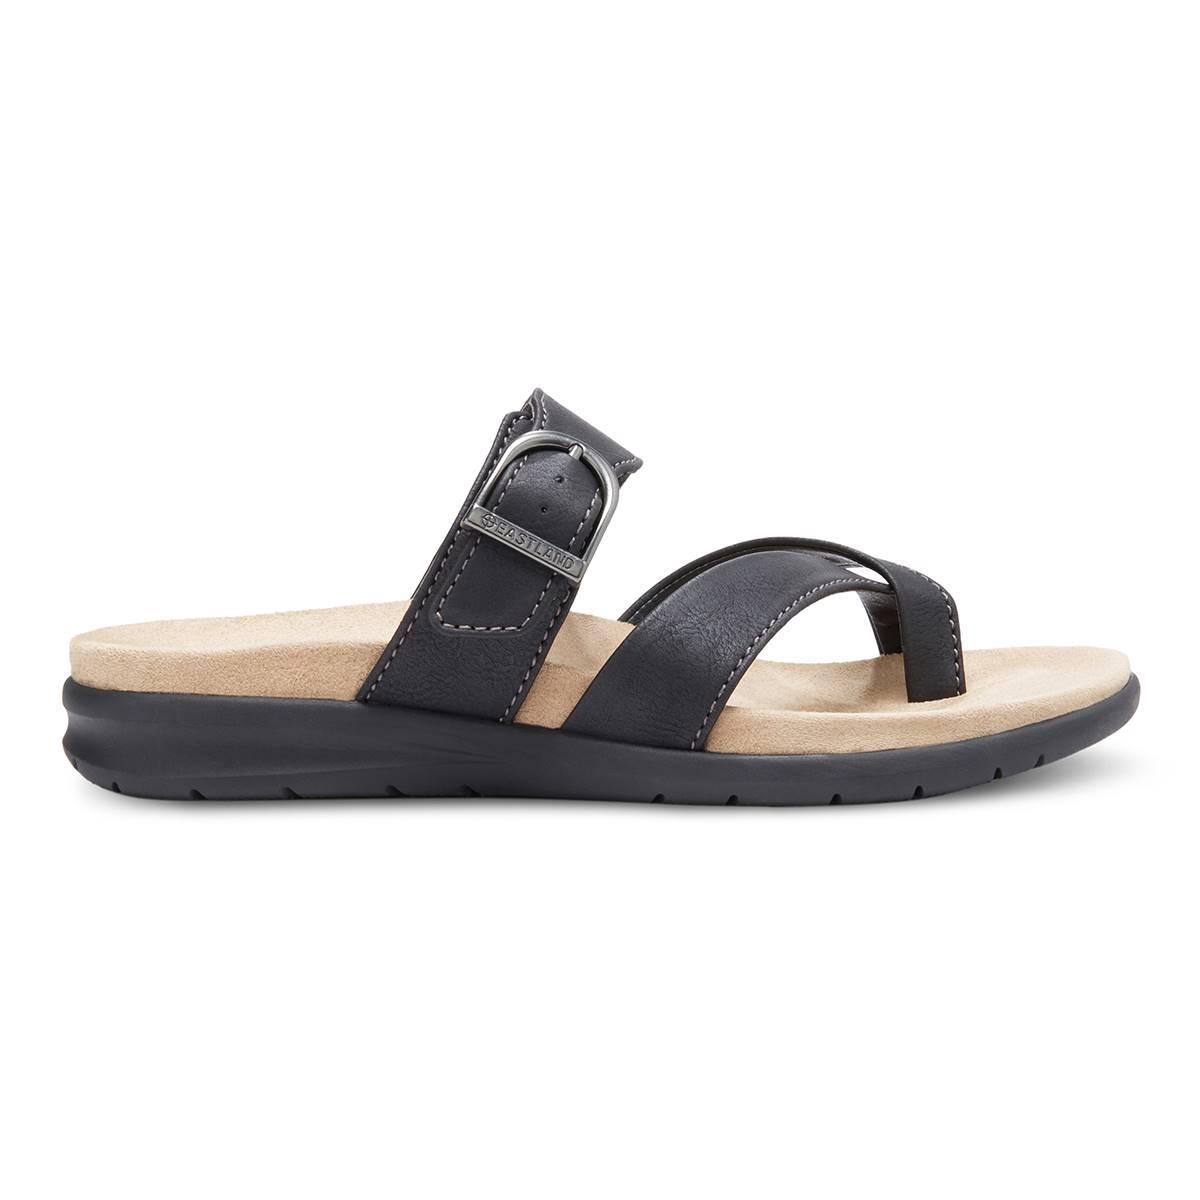 Eastland Sienna Womens Slide Sandals Light Grey Product Image